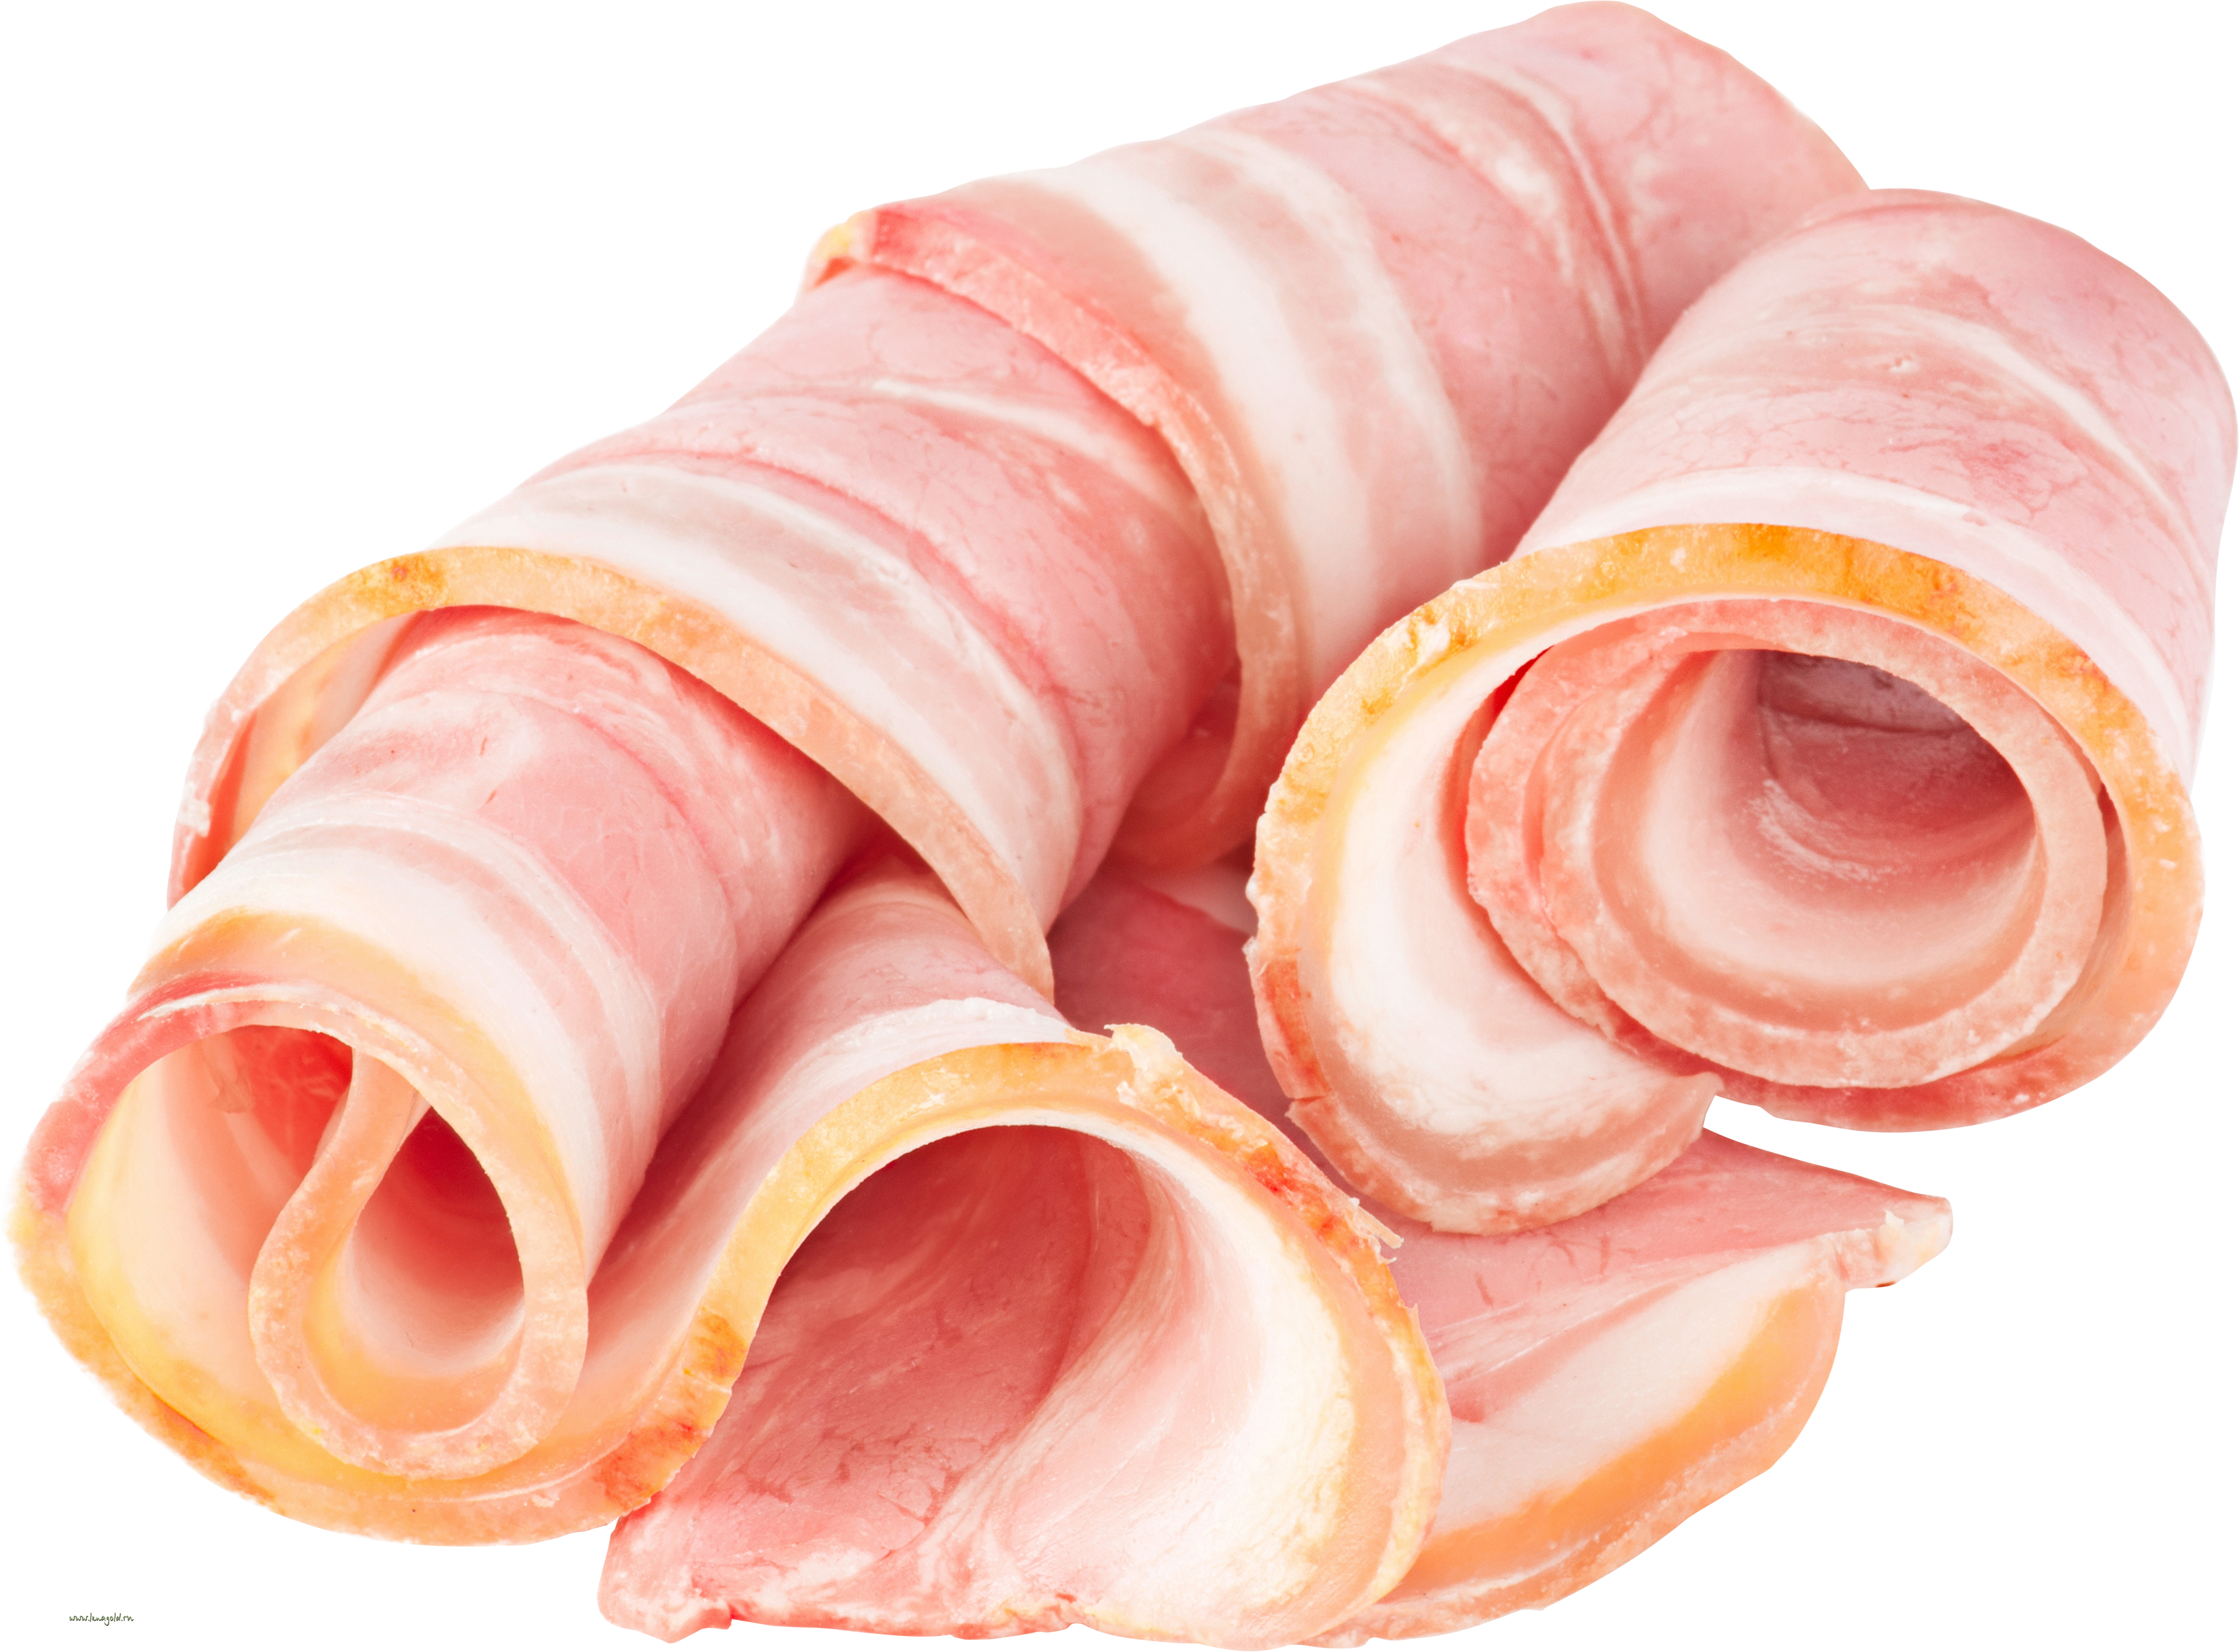 Bacon Slices Three